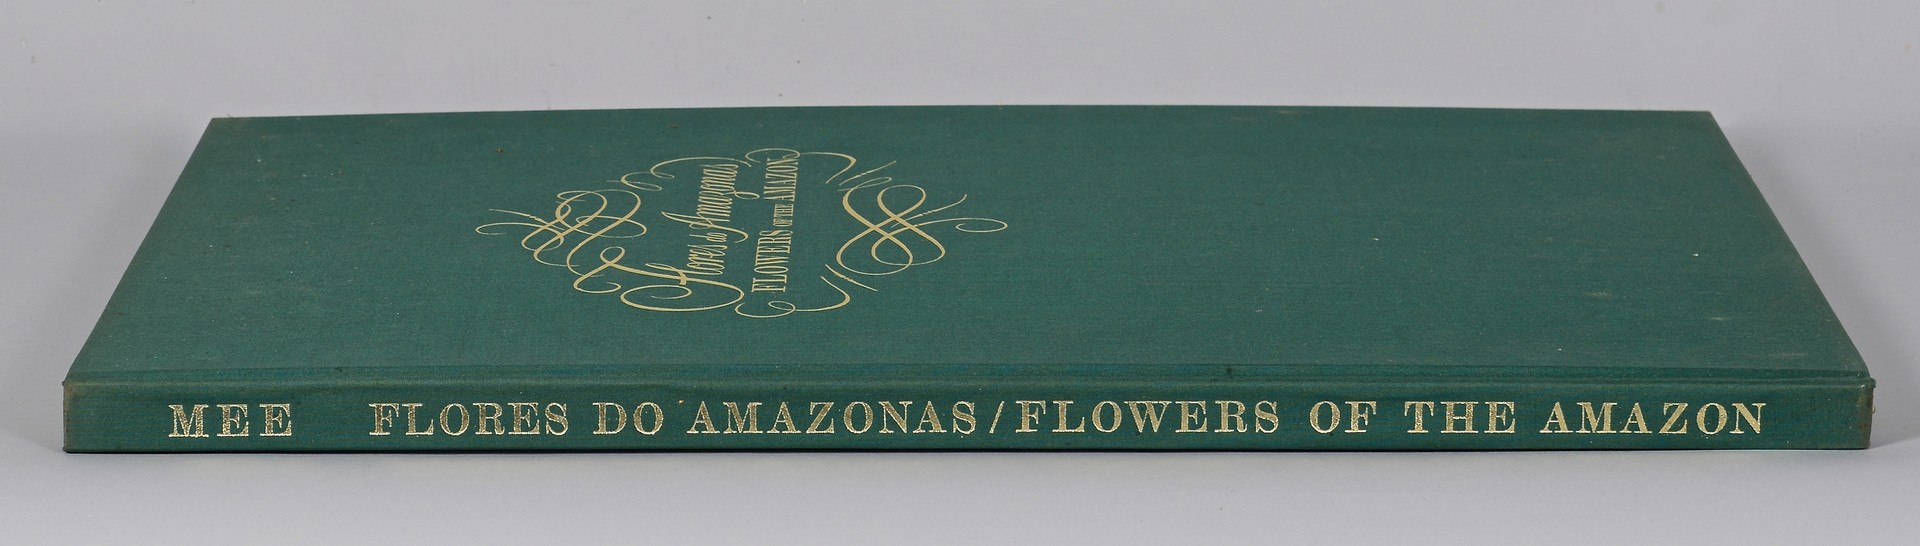 Lot 237: "Flores do Amazonas" Elephant Folio, Mee